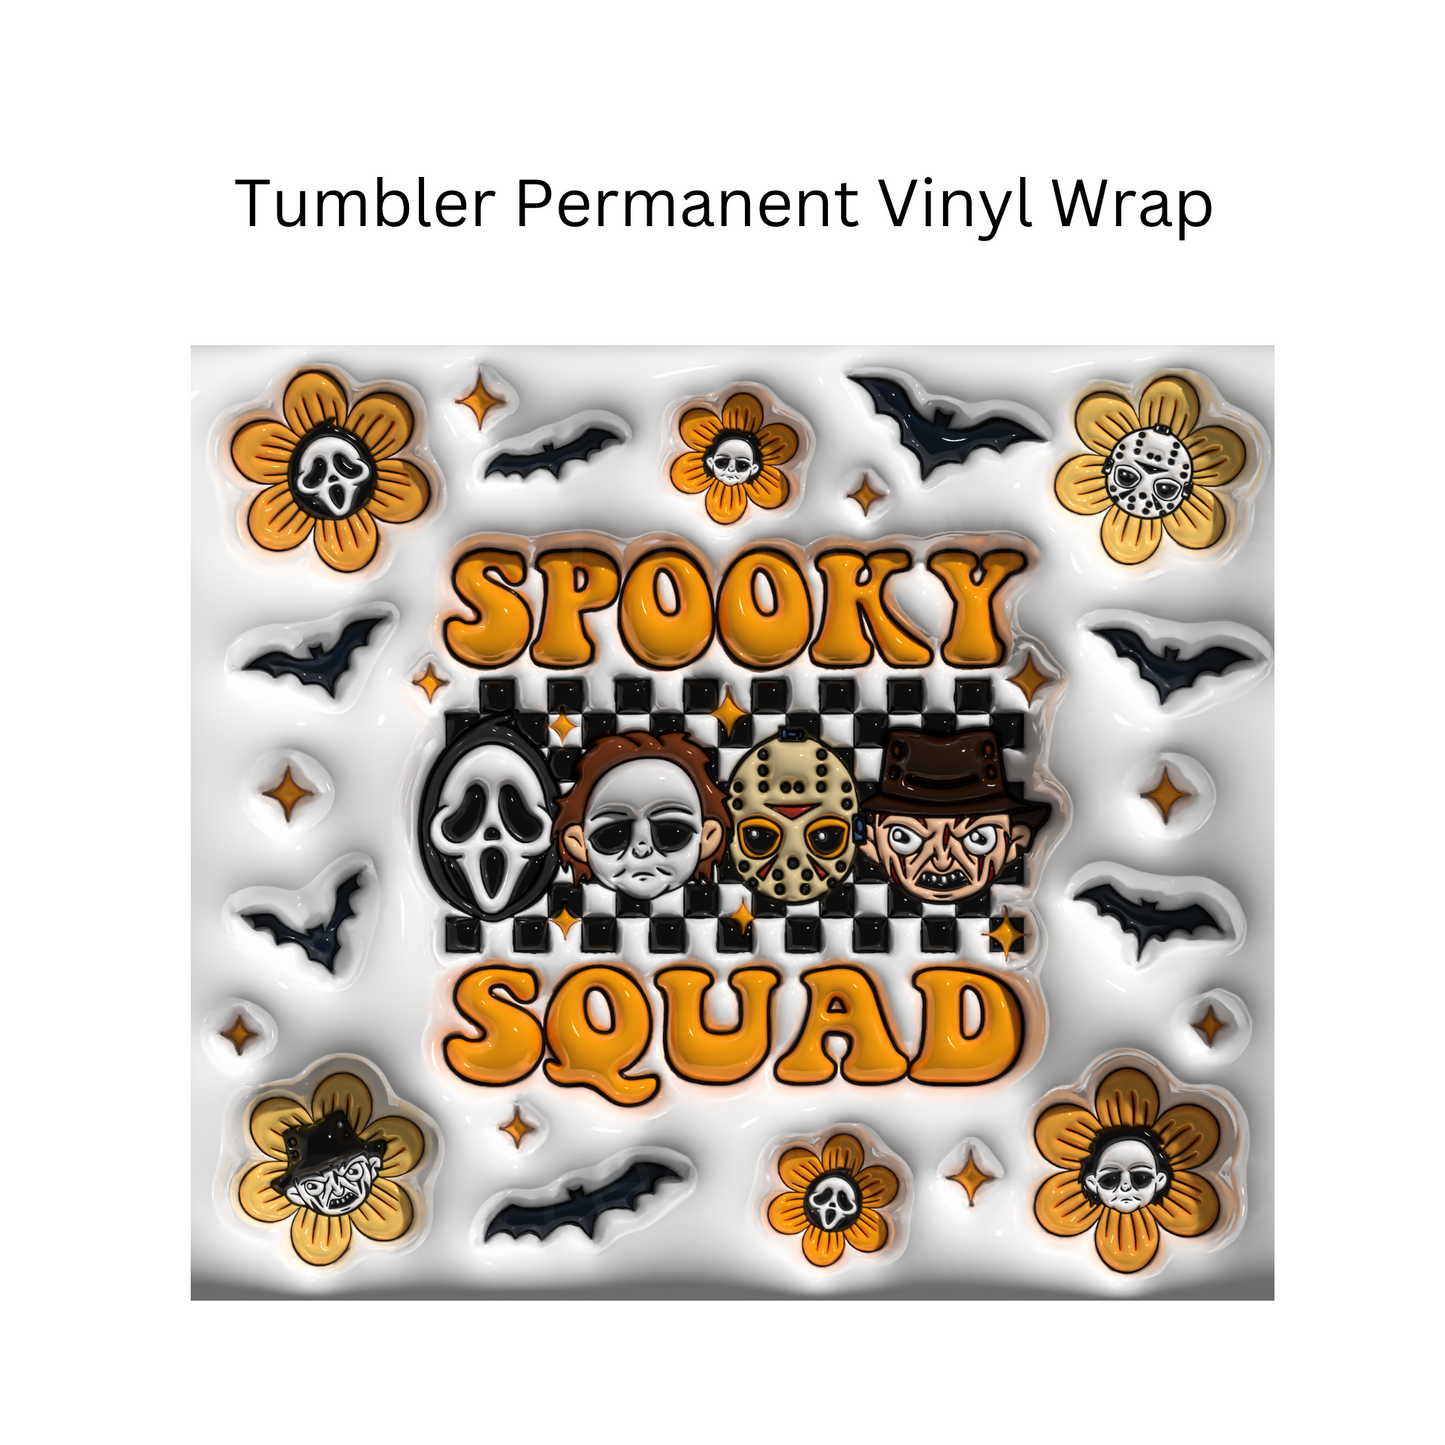 Spooky Squad Permanent Vinyl Wrap